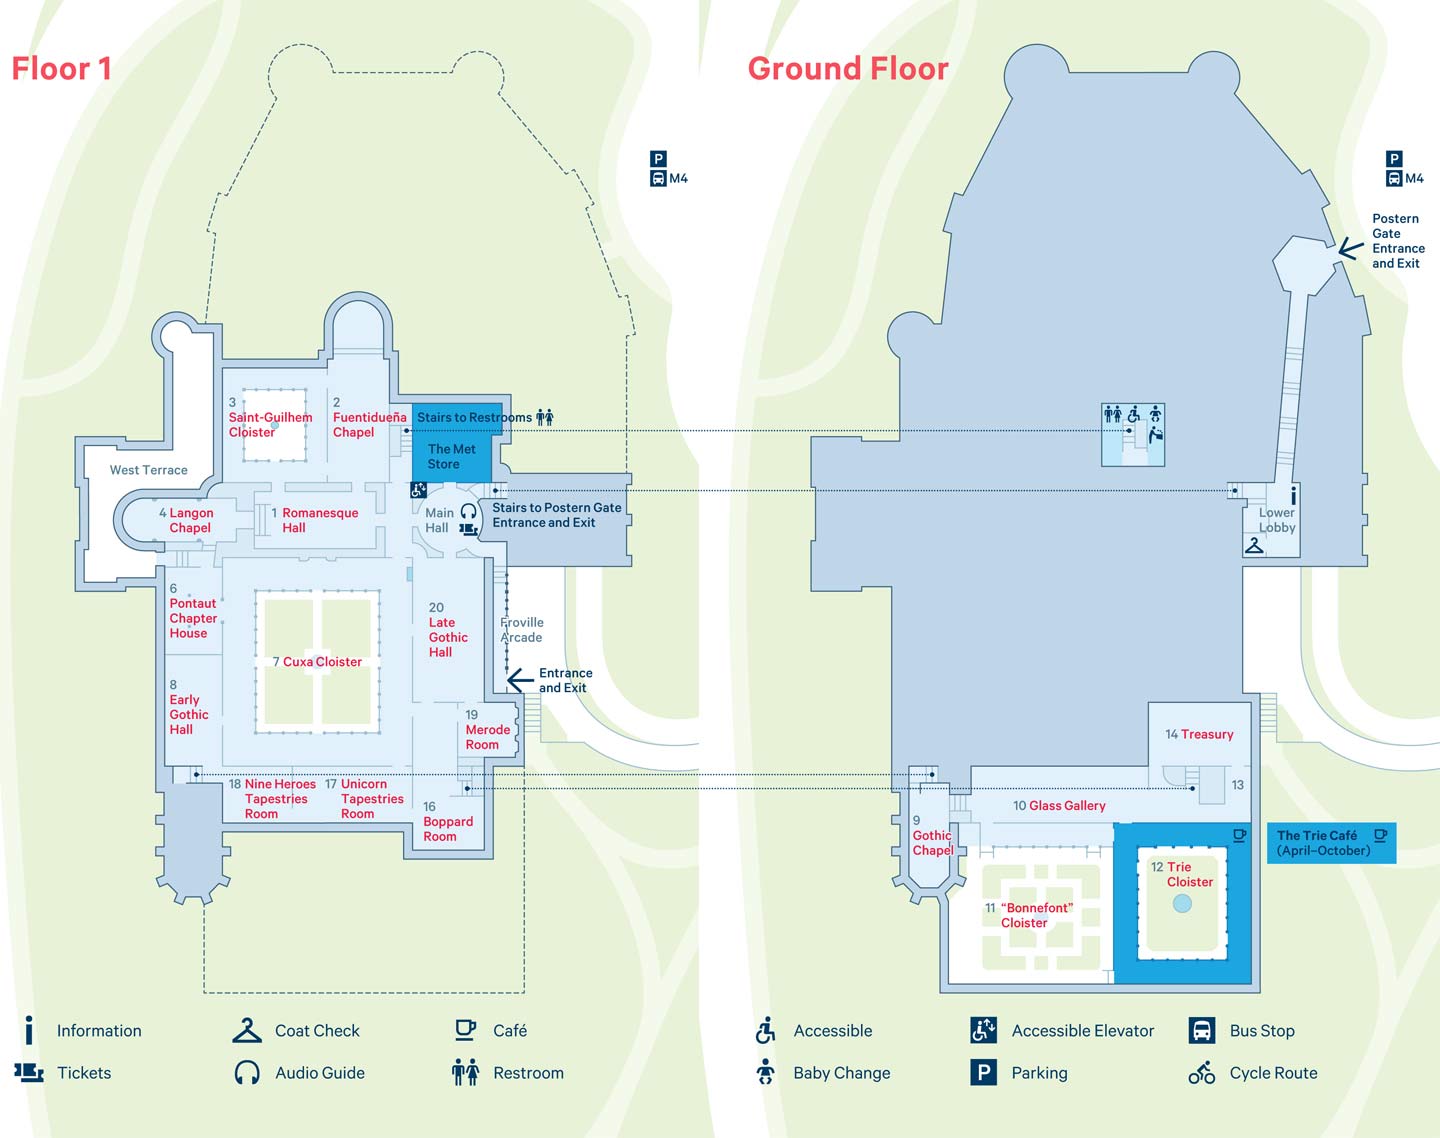 Map of The Met Cloisters | Floor 1 and Ground Floor